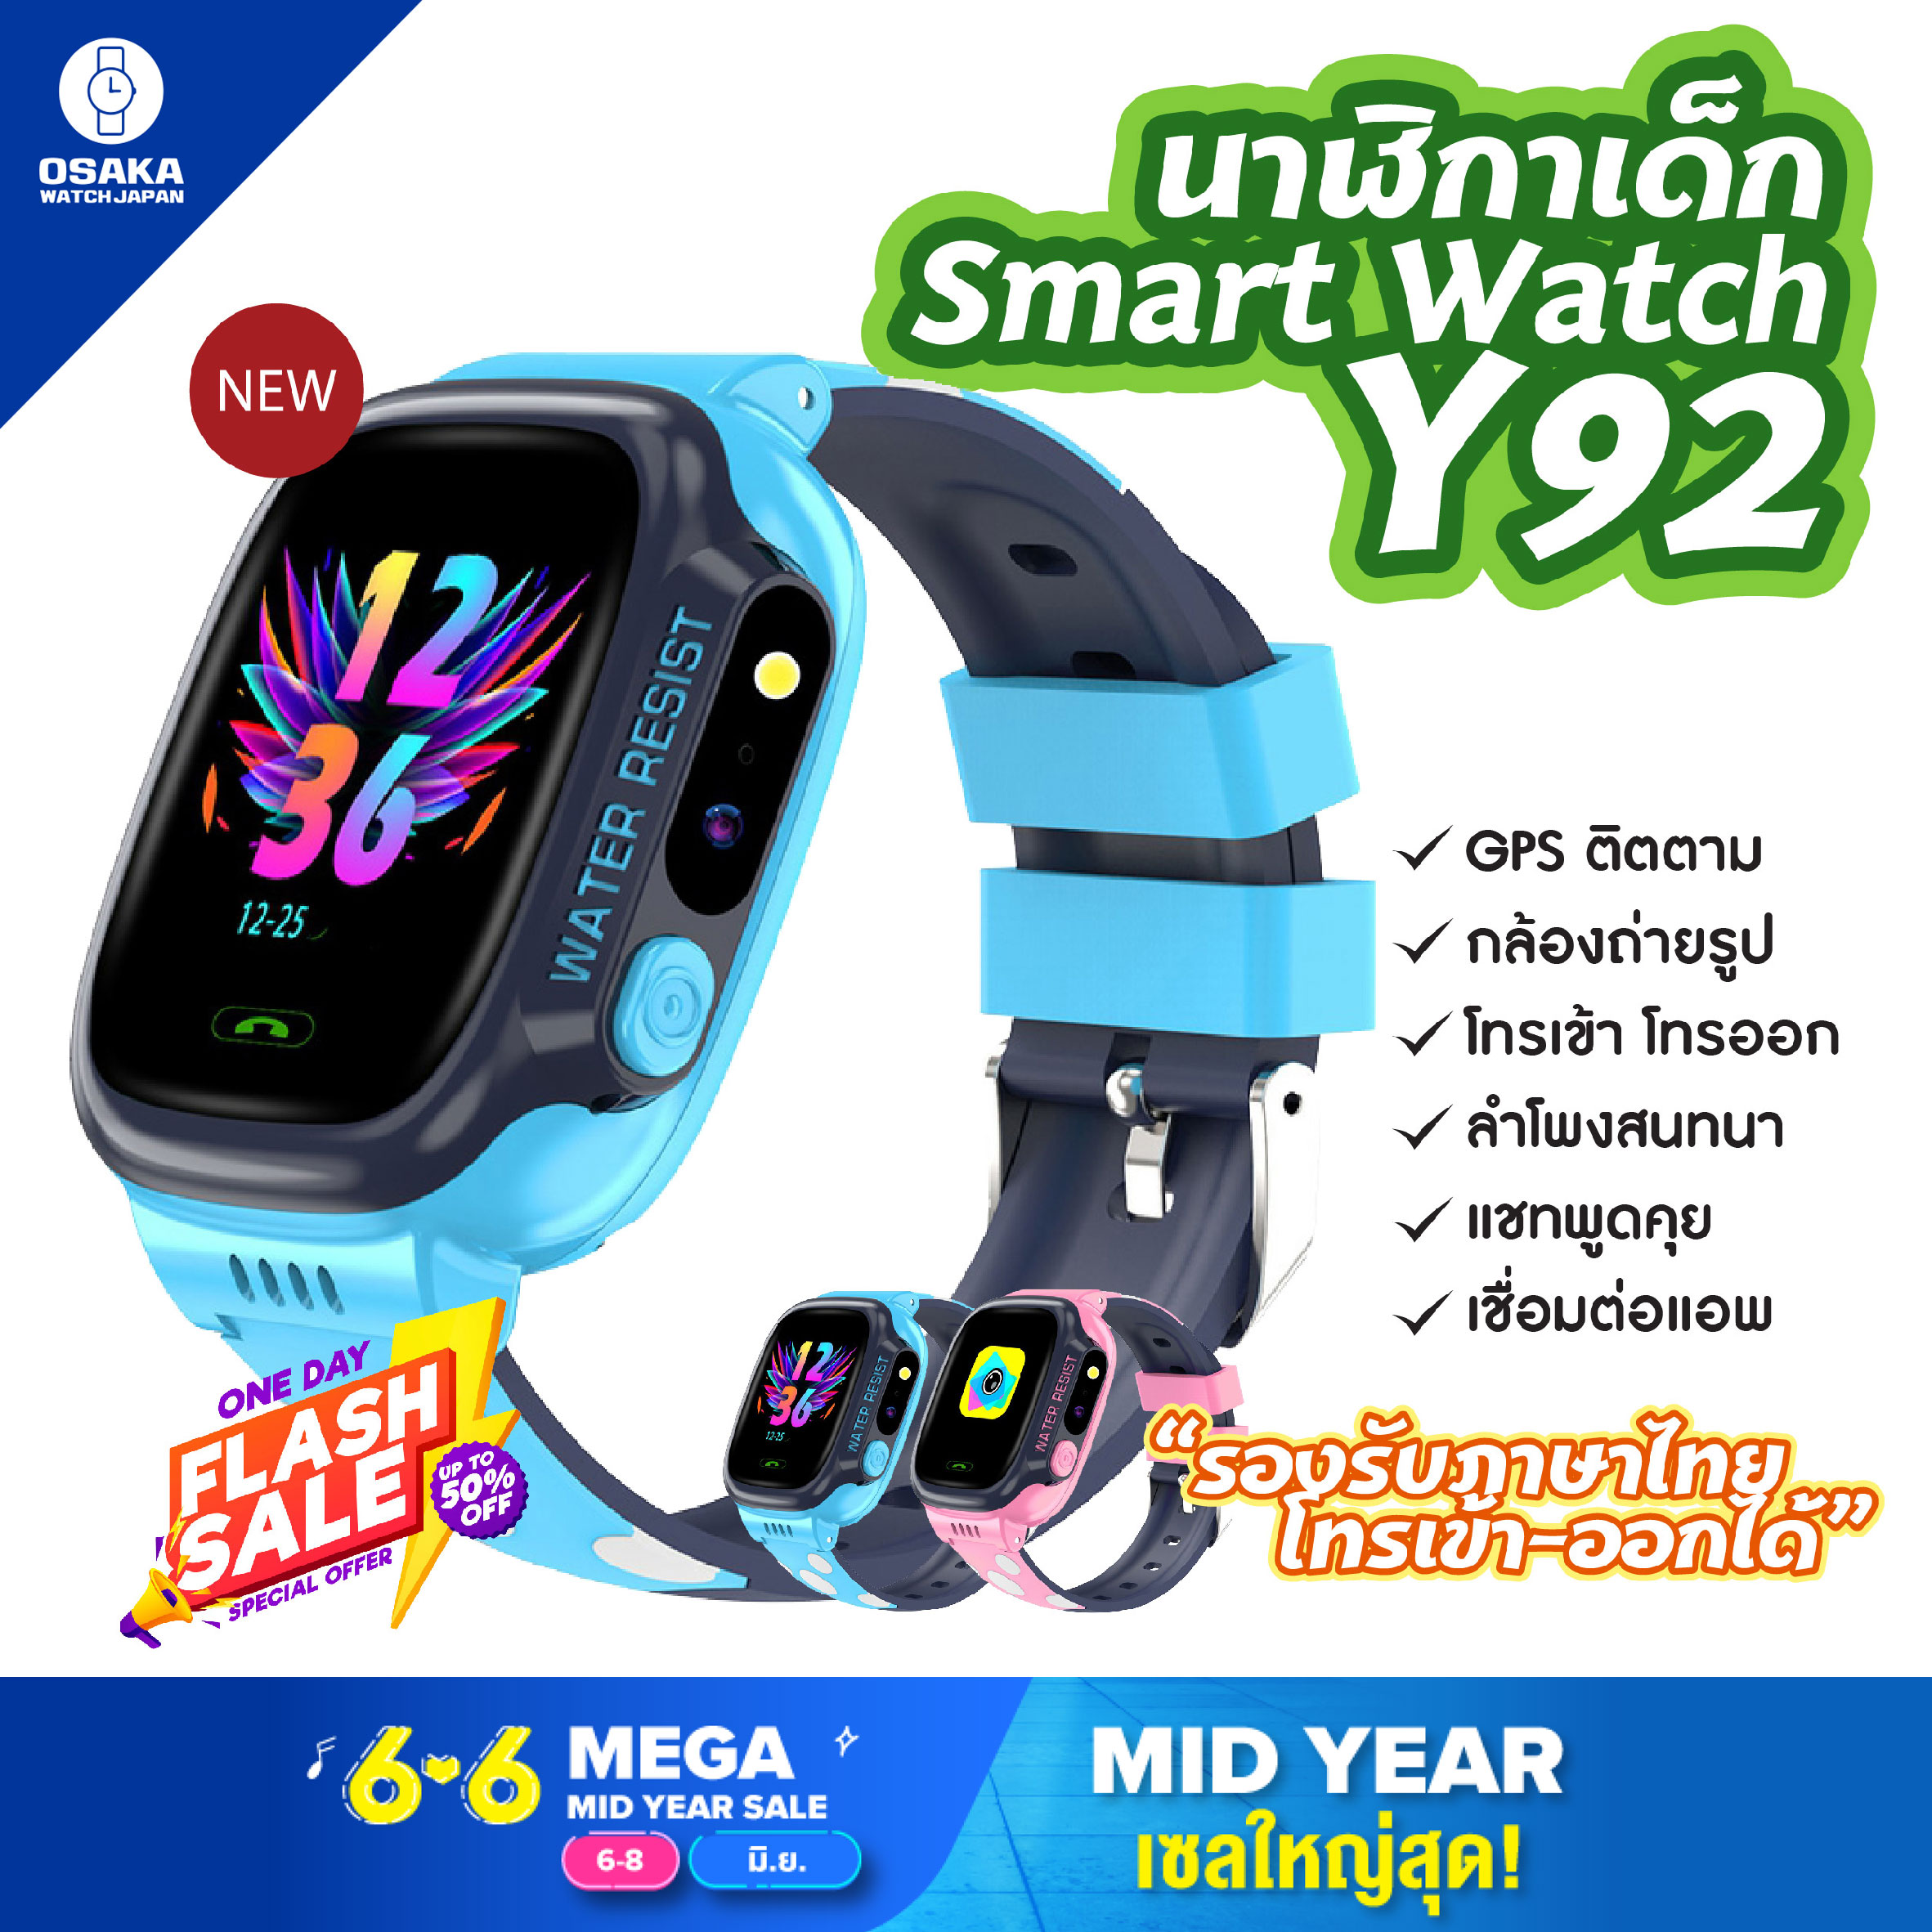 OsakaWatch ใหม่ Smart Watch Y92 นาฬิกาสำหรับเด็ก นาฬิกาติดตามเด็ก นาฬิกาโทรศัพท์ ใส่ซิมได้ บอกตำแน่ง ไฟฉาย GPS ติดตาม  (จัดส่งไว มีบริการเก็บเงินปลายทาง)